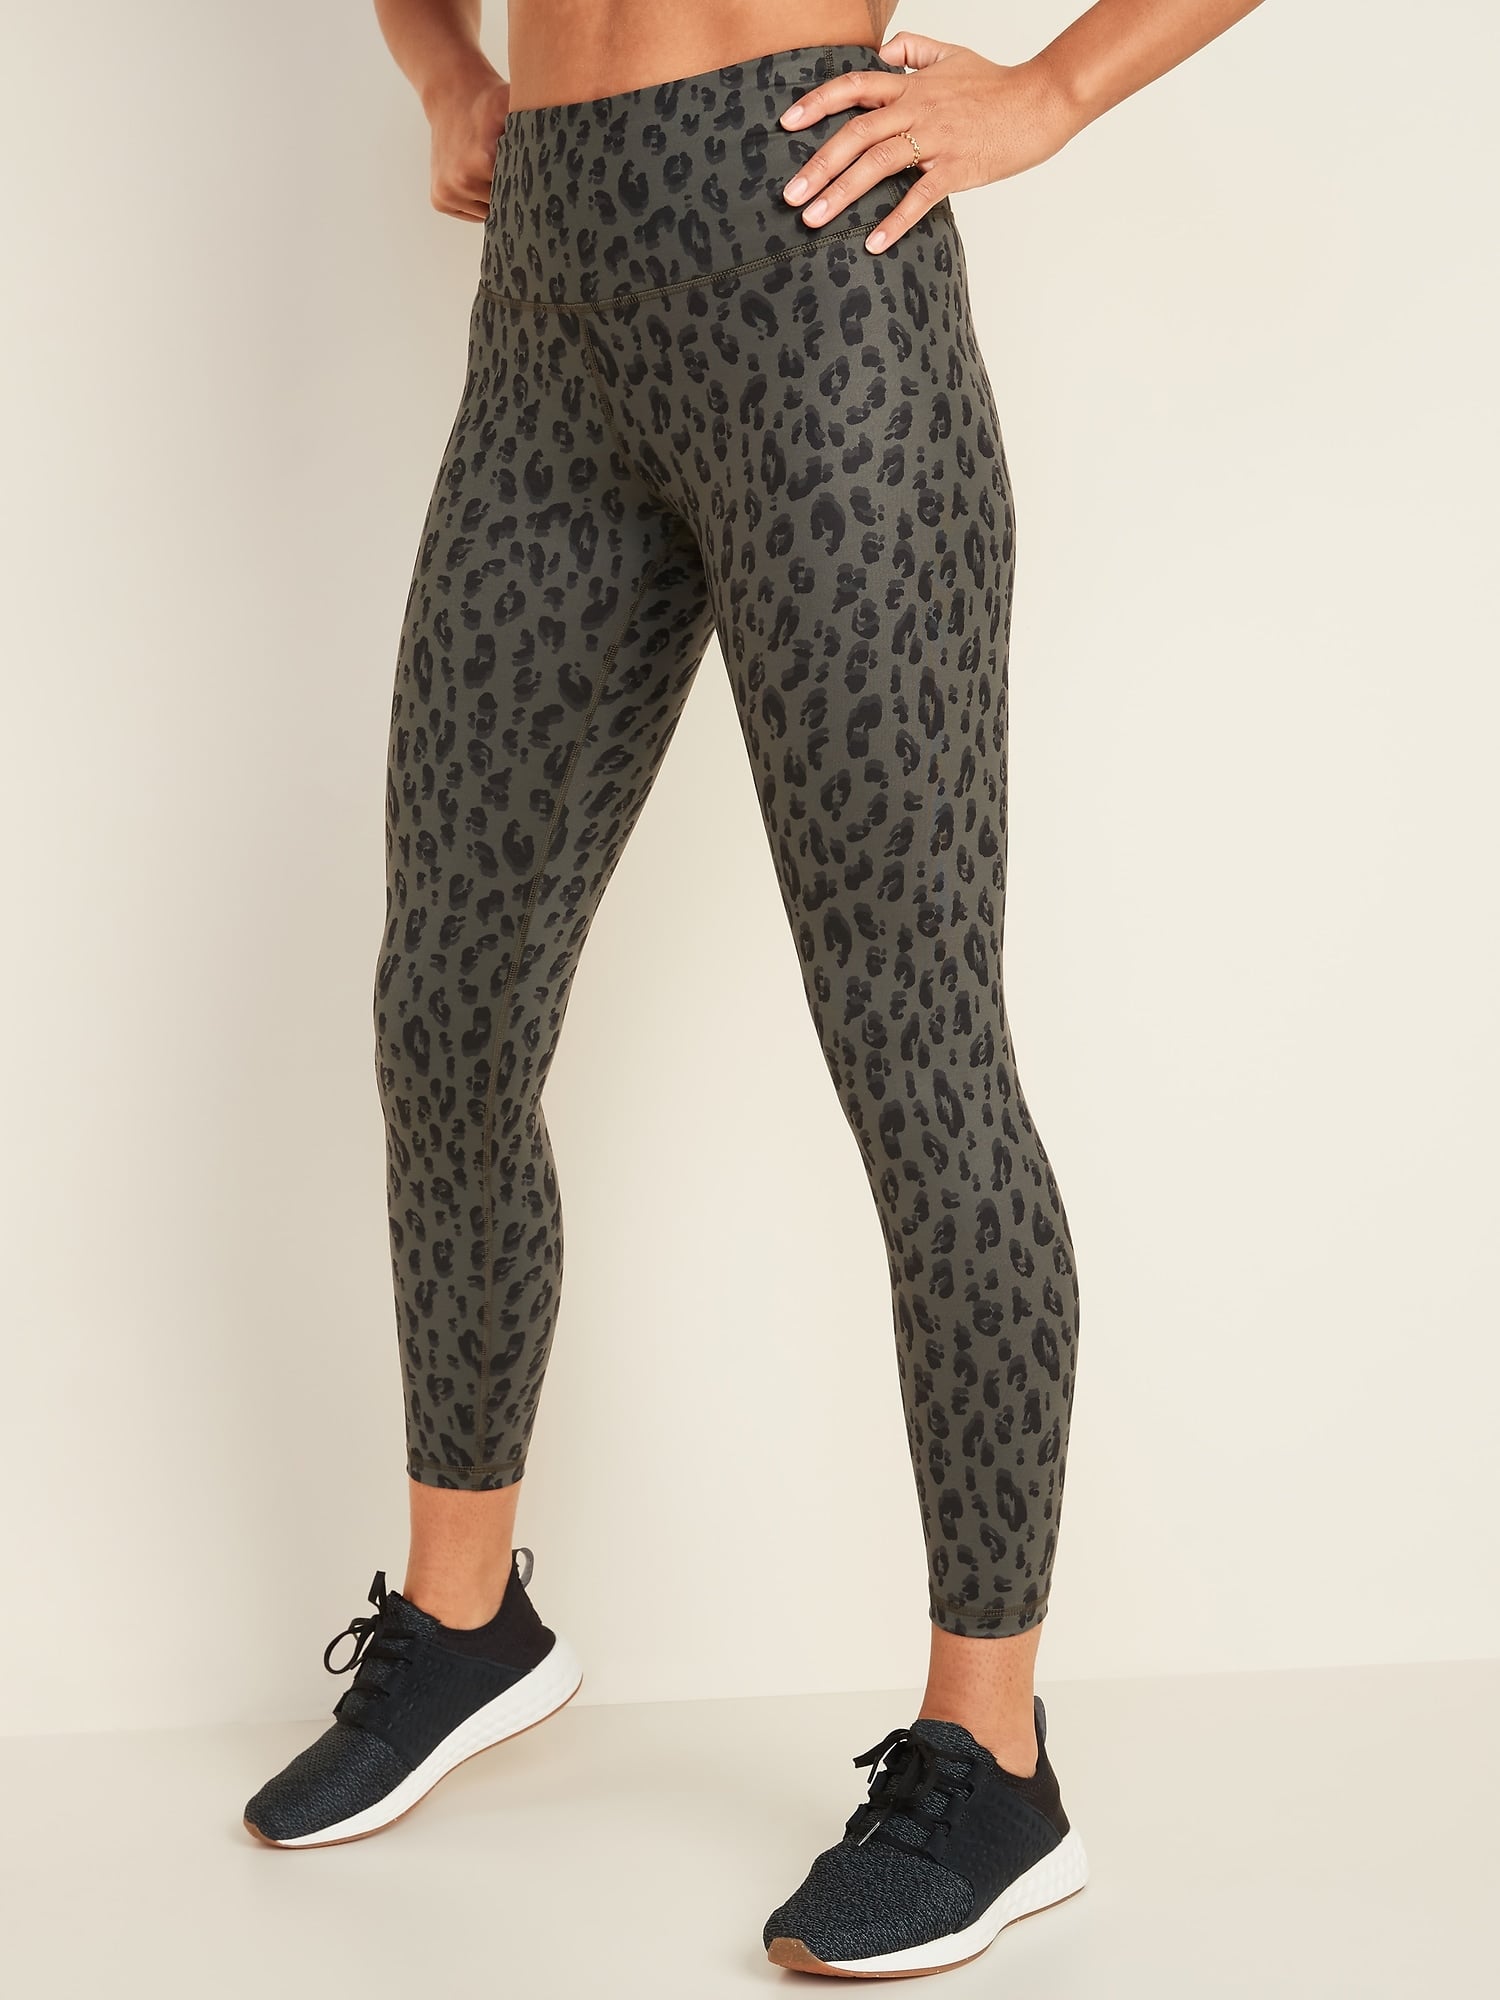 7 ANIMAL PRINTS leopard high waisted yoga pants workout leggings